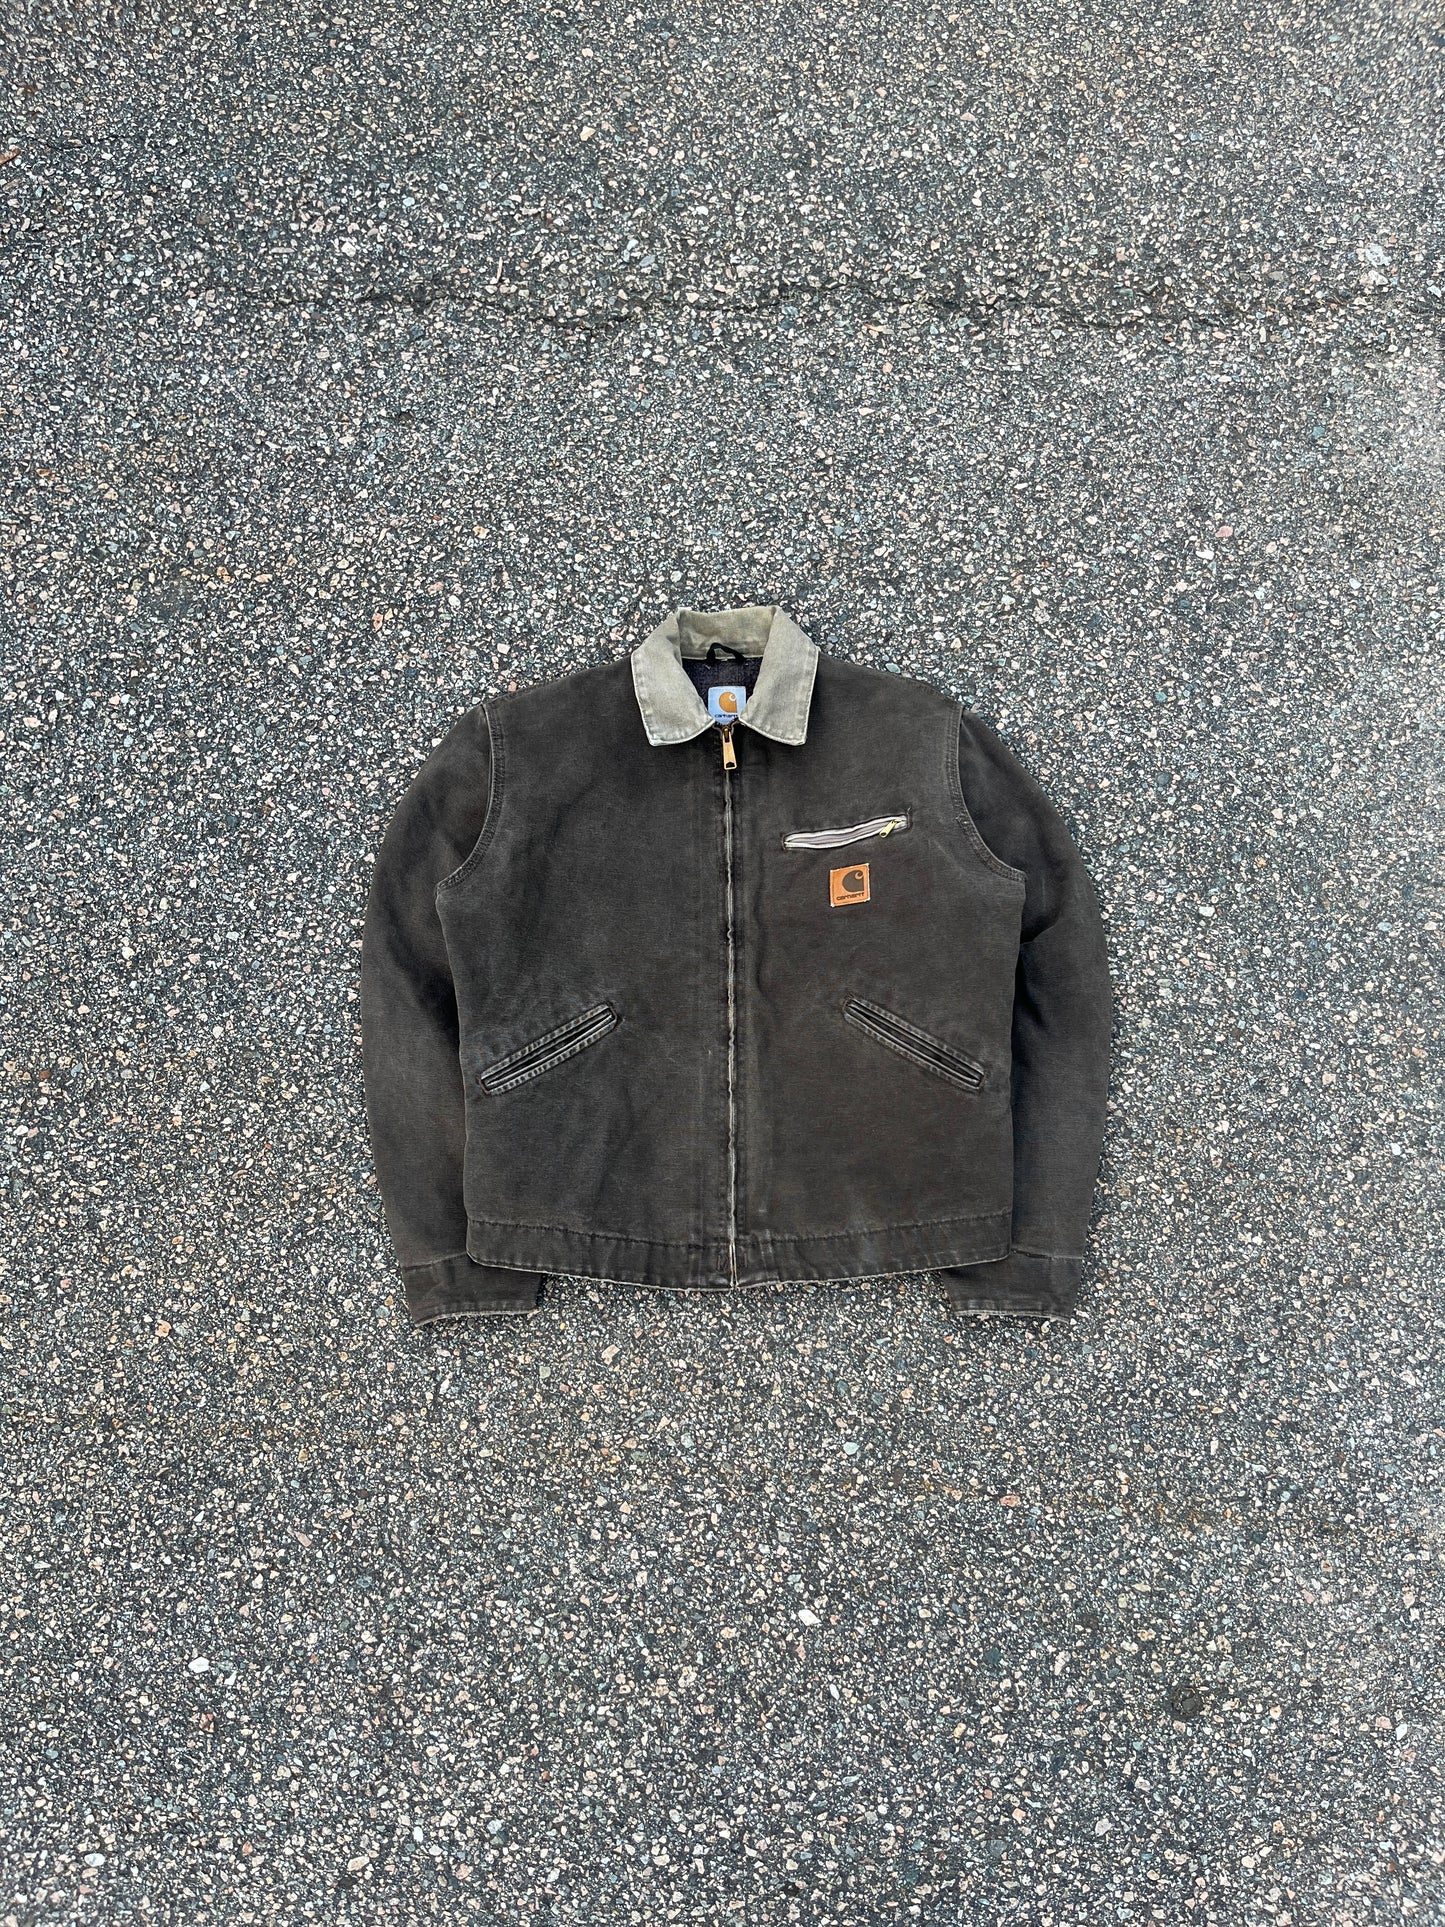 Faded Timber Brown Carhartt Detroit Jacket - Medium